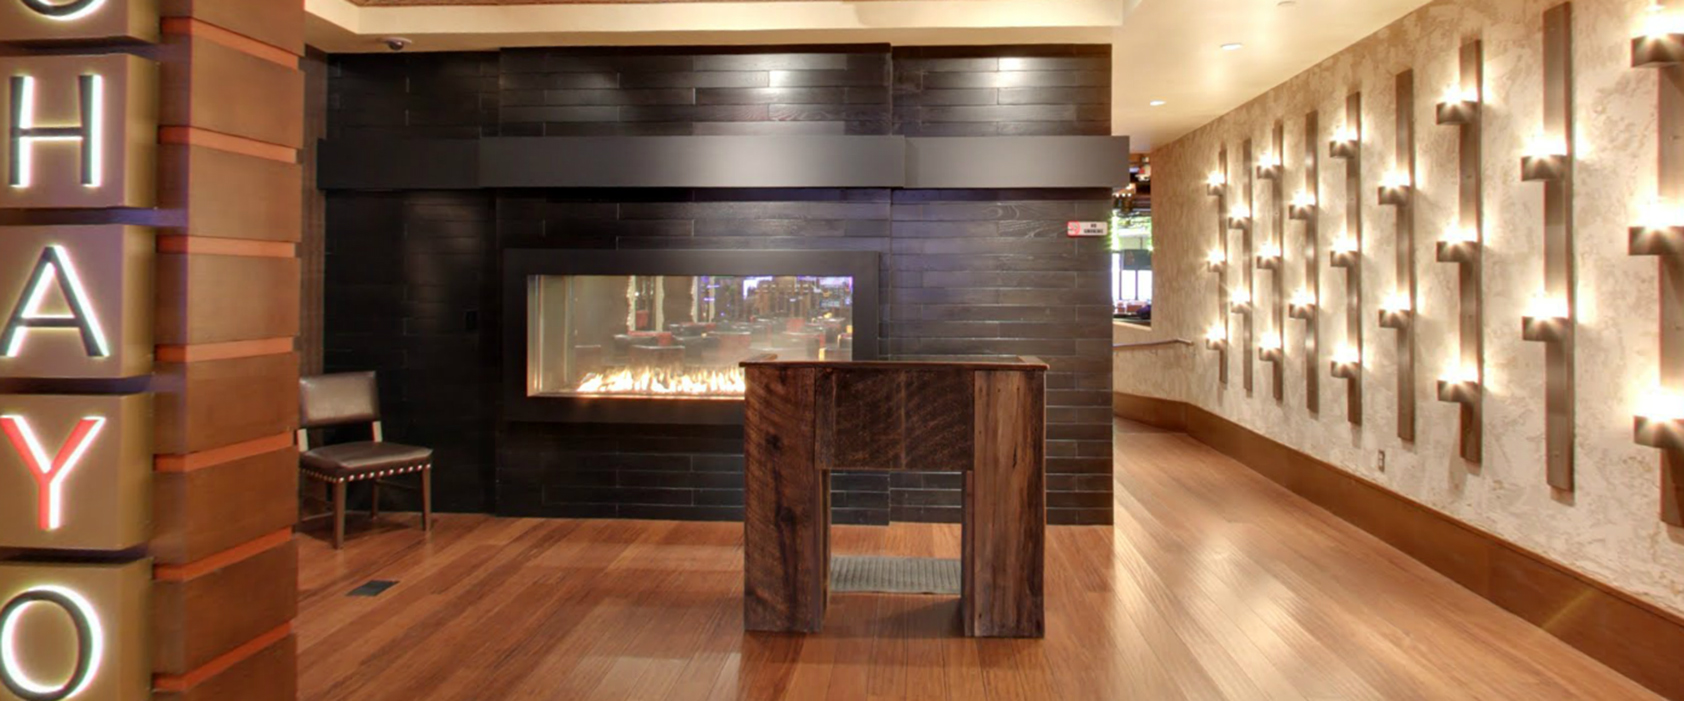 custom see through fireplace